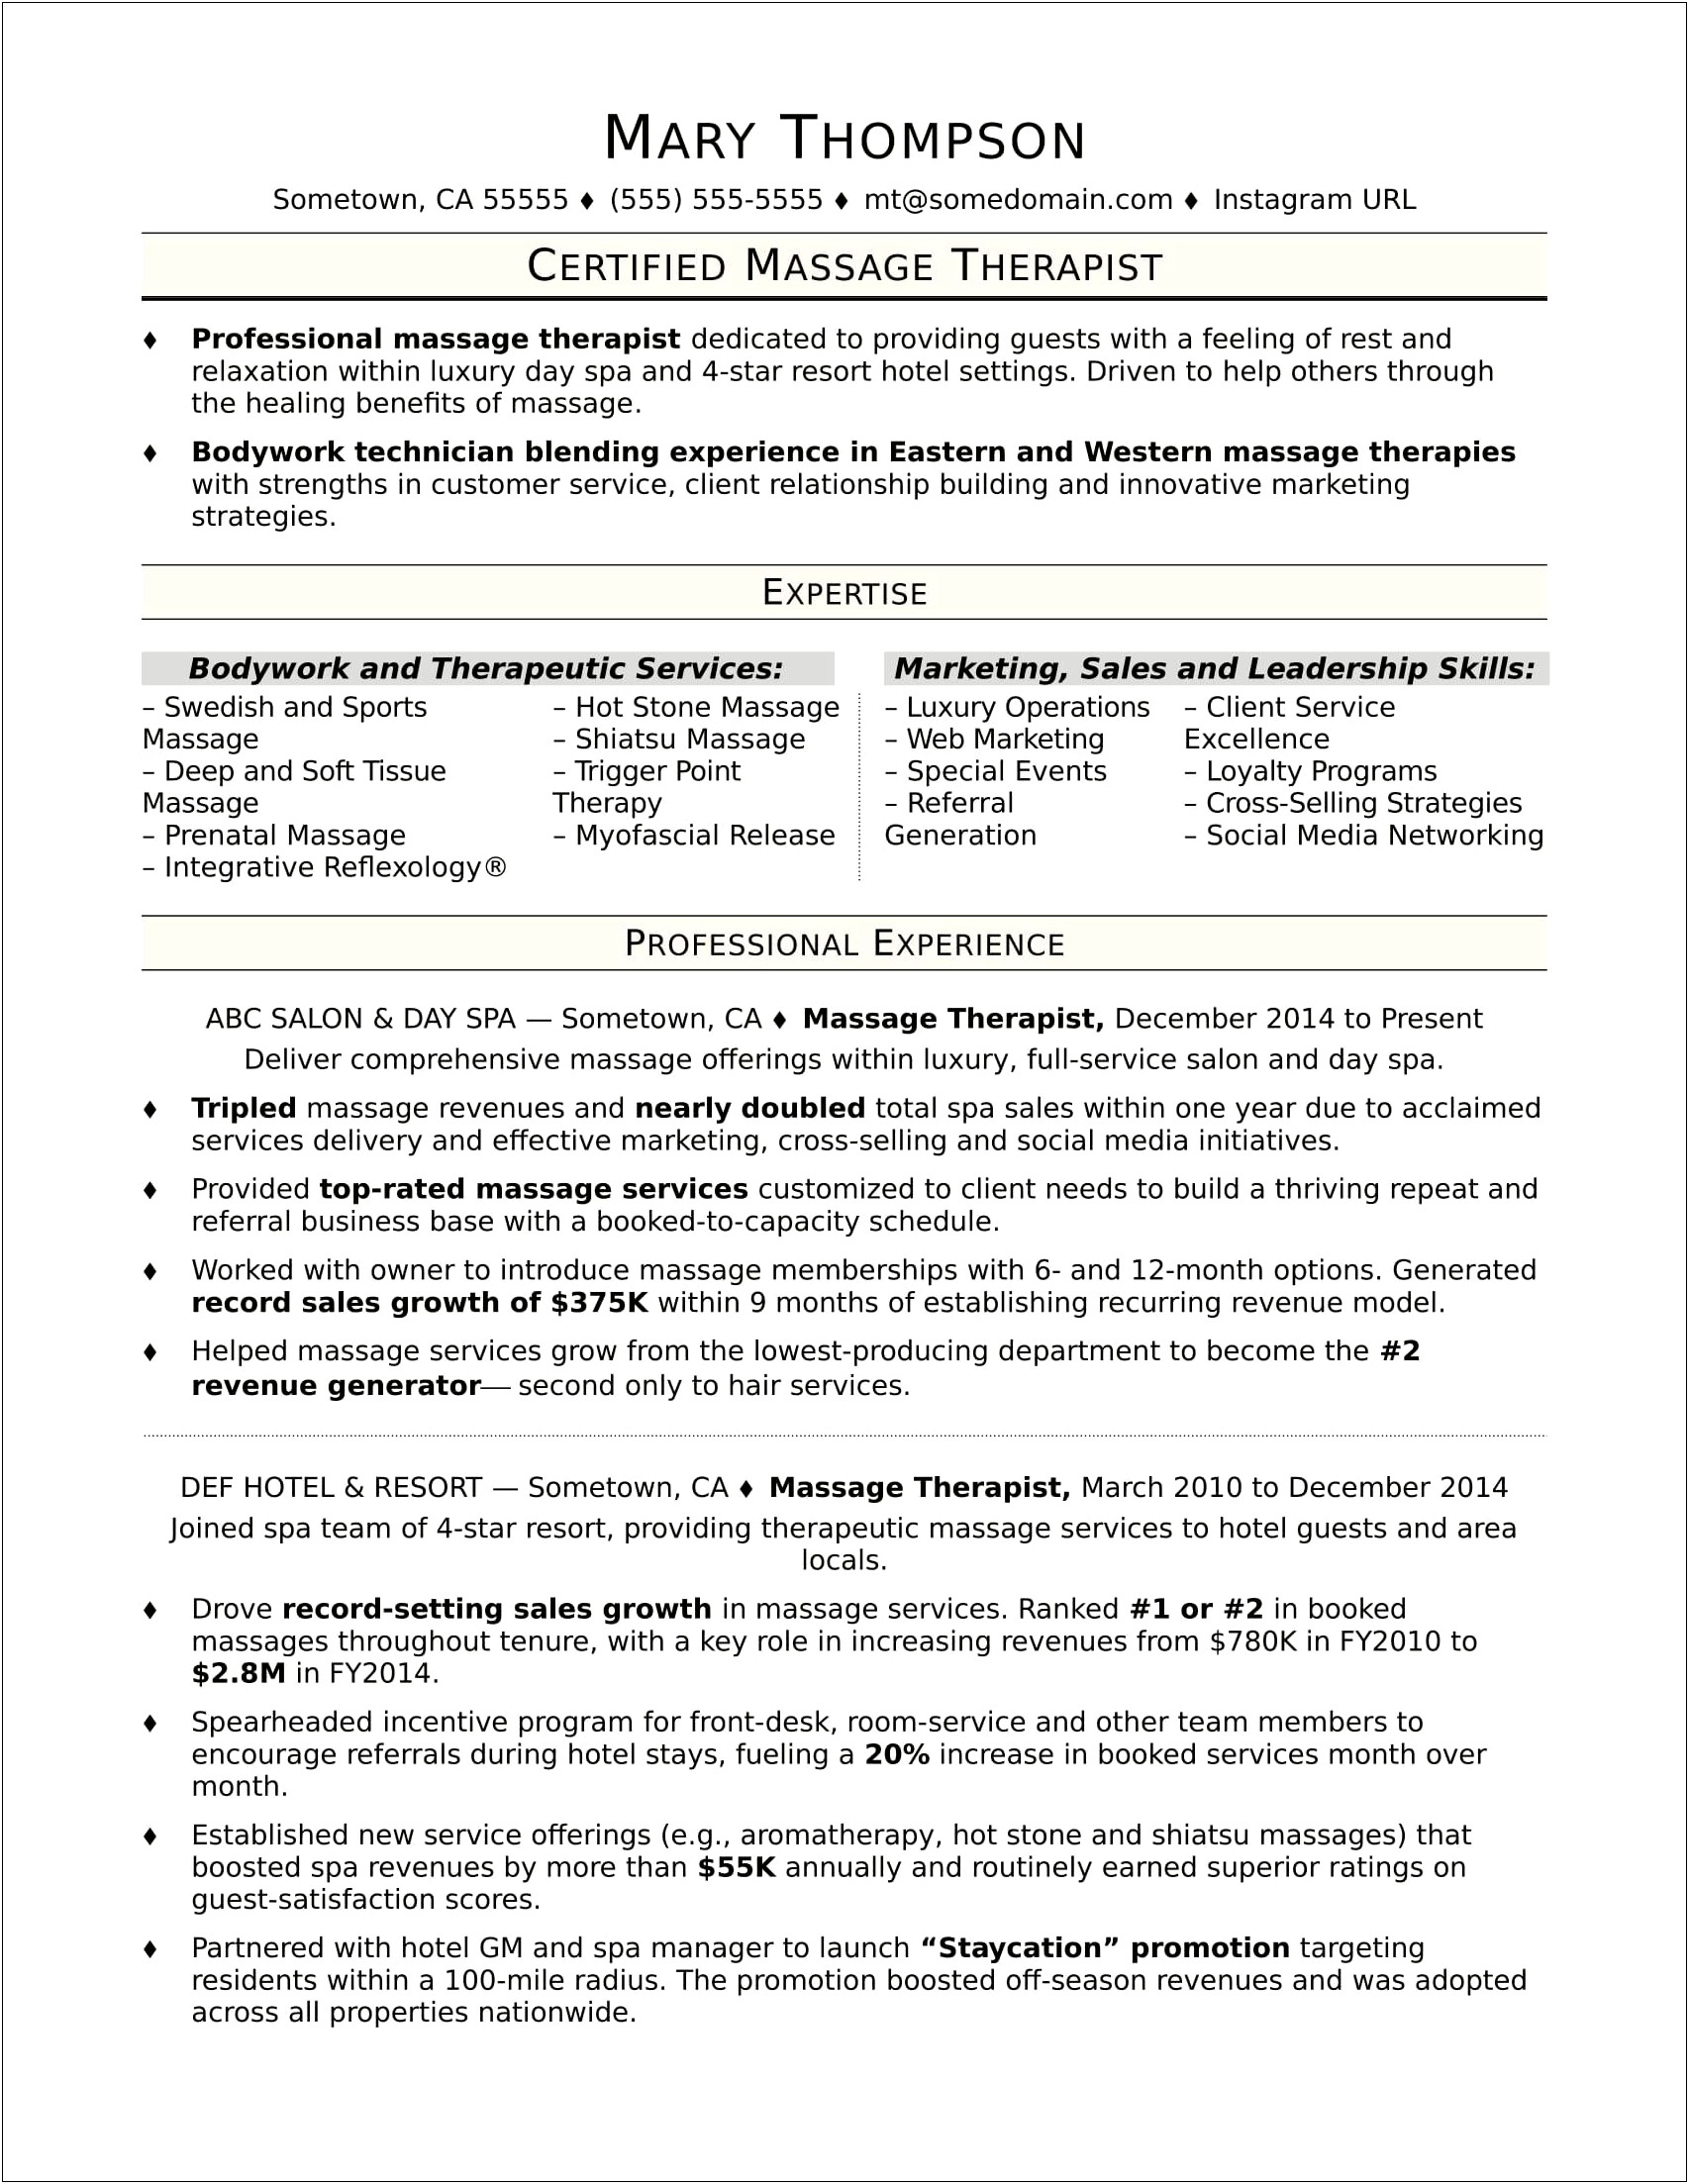 Job Description Massage Therapist Resume